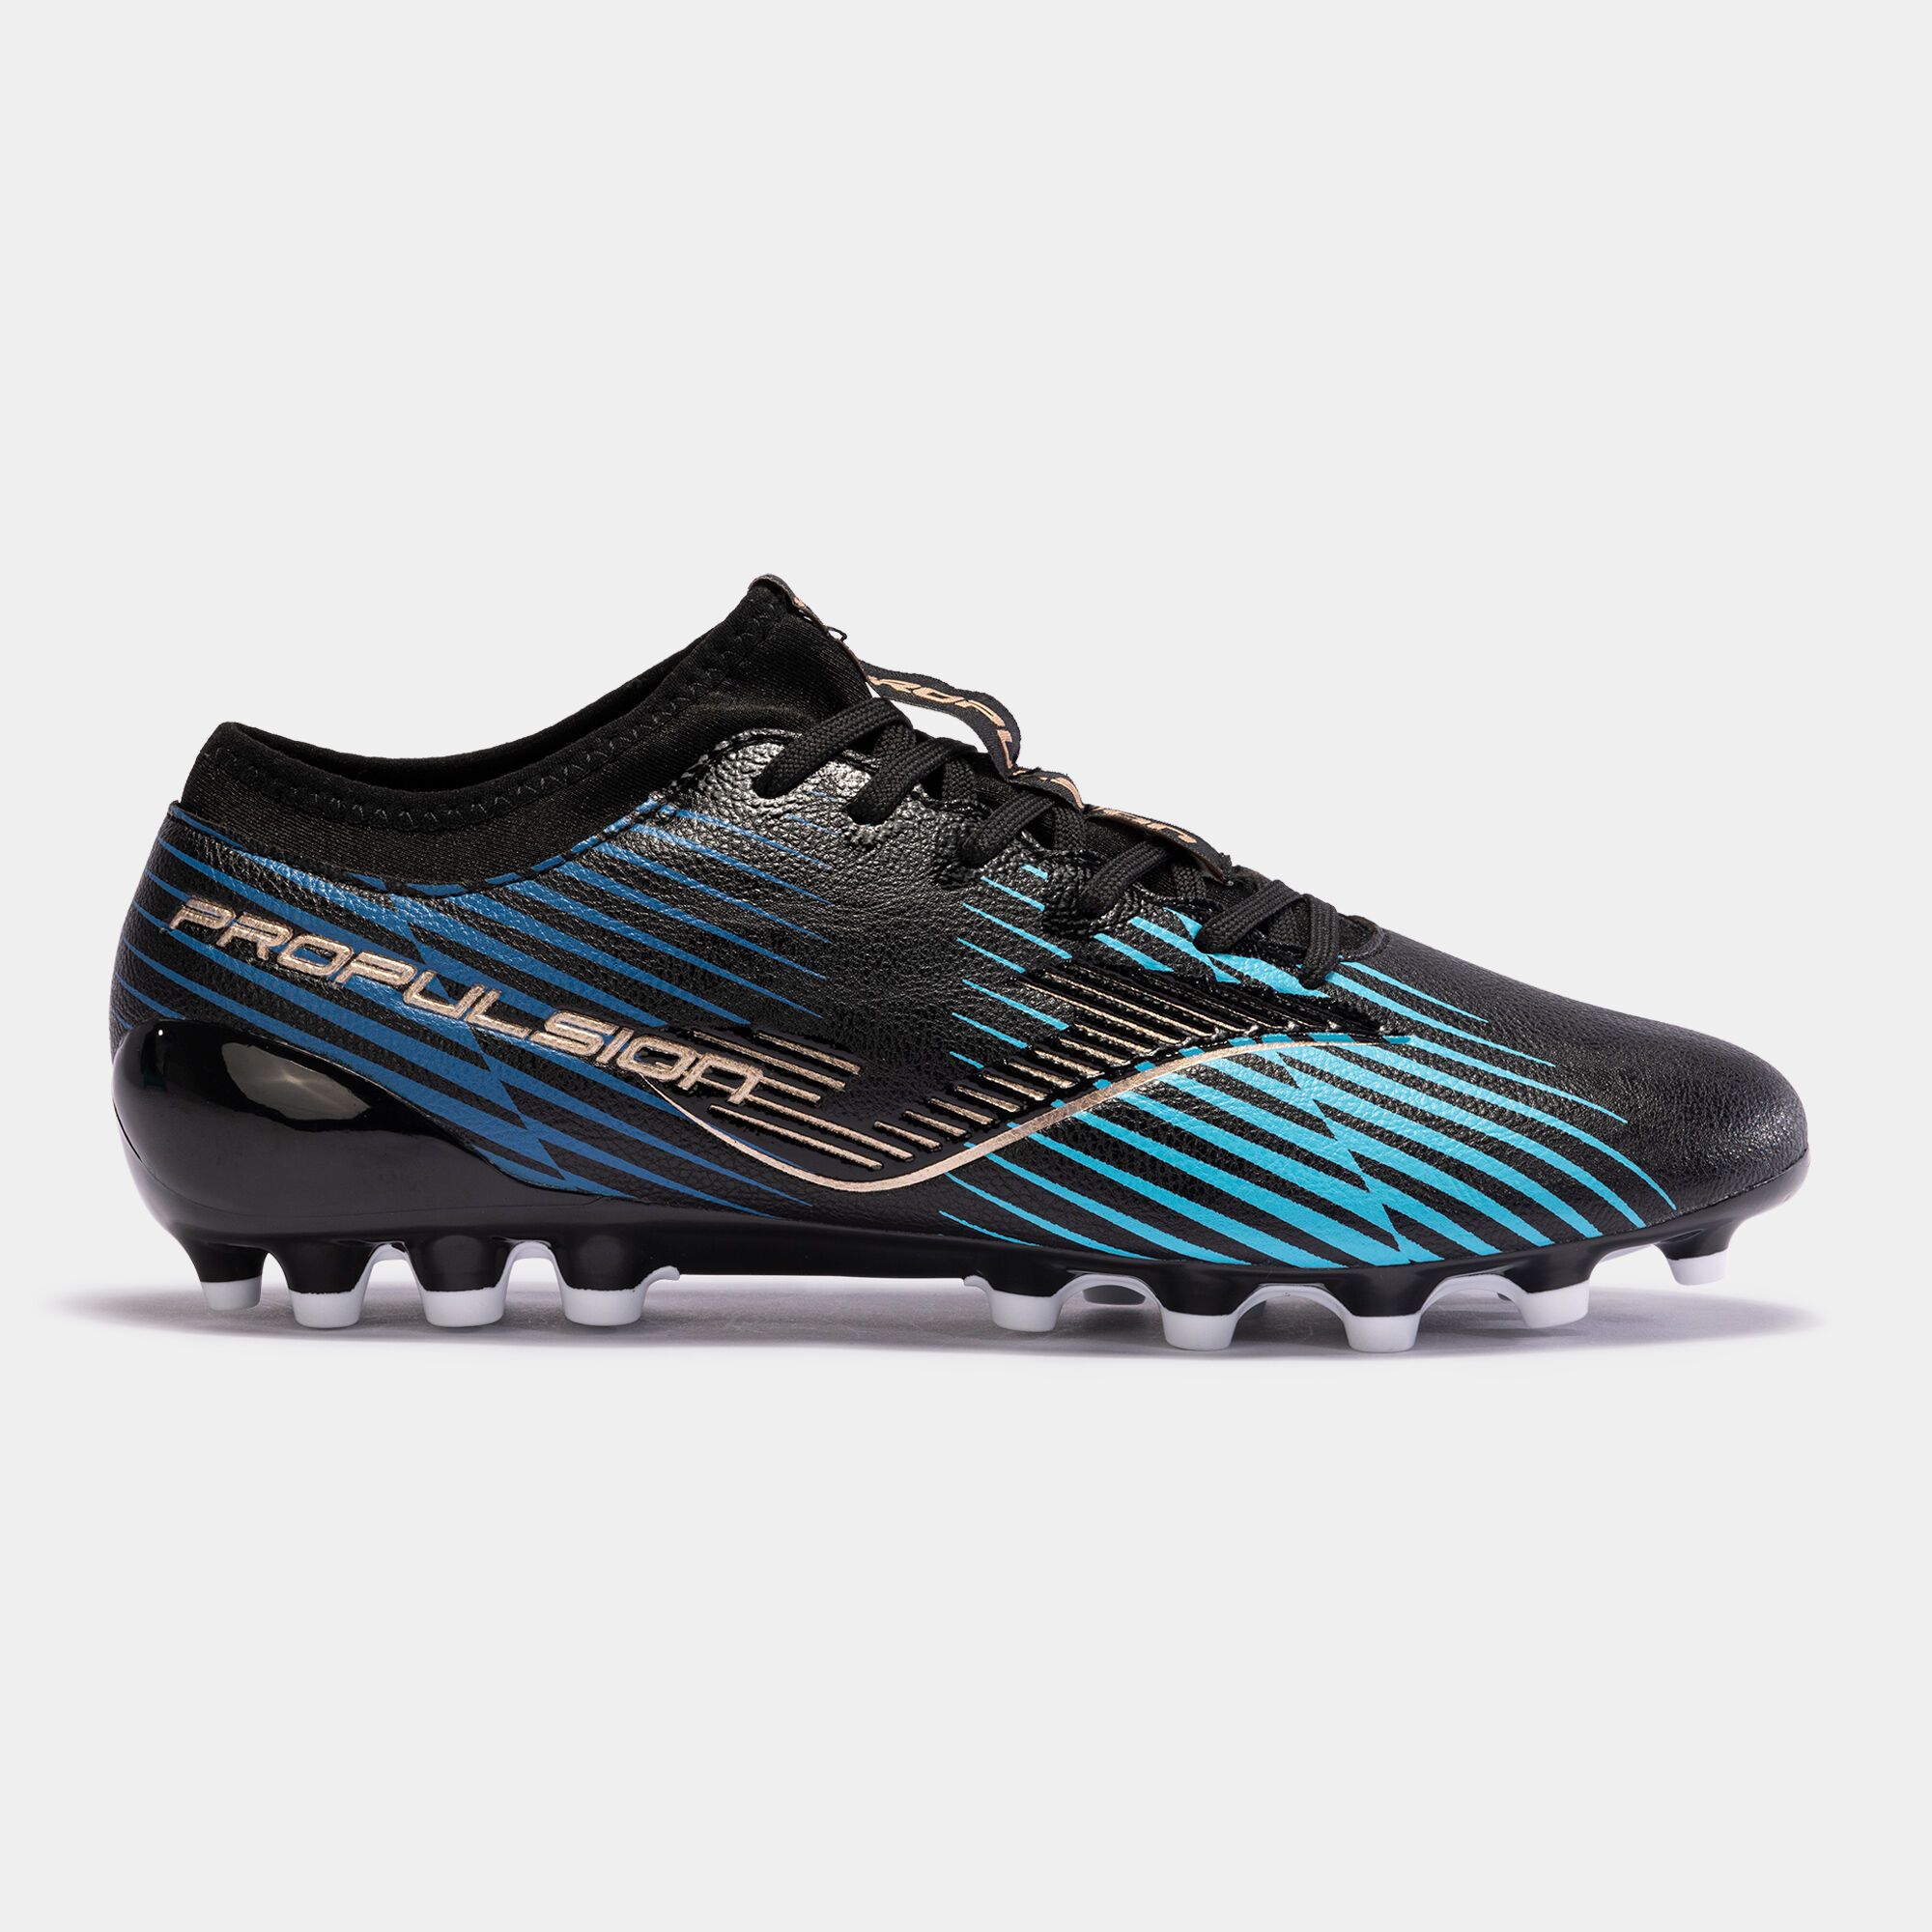 Chaussures football Propulsion Cup 23 gazon synthétique AG noir bleu